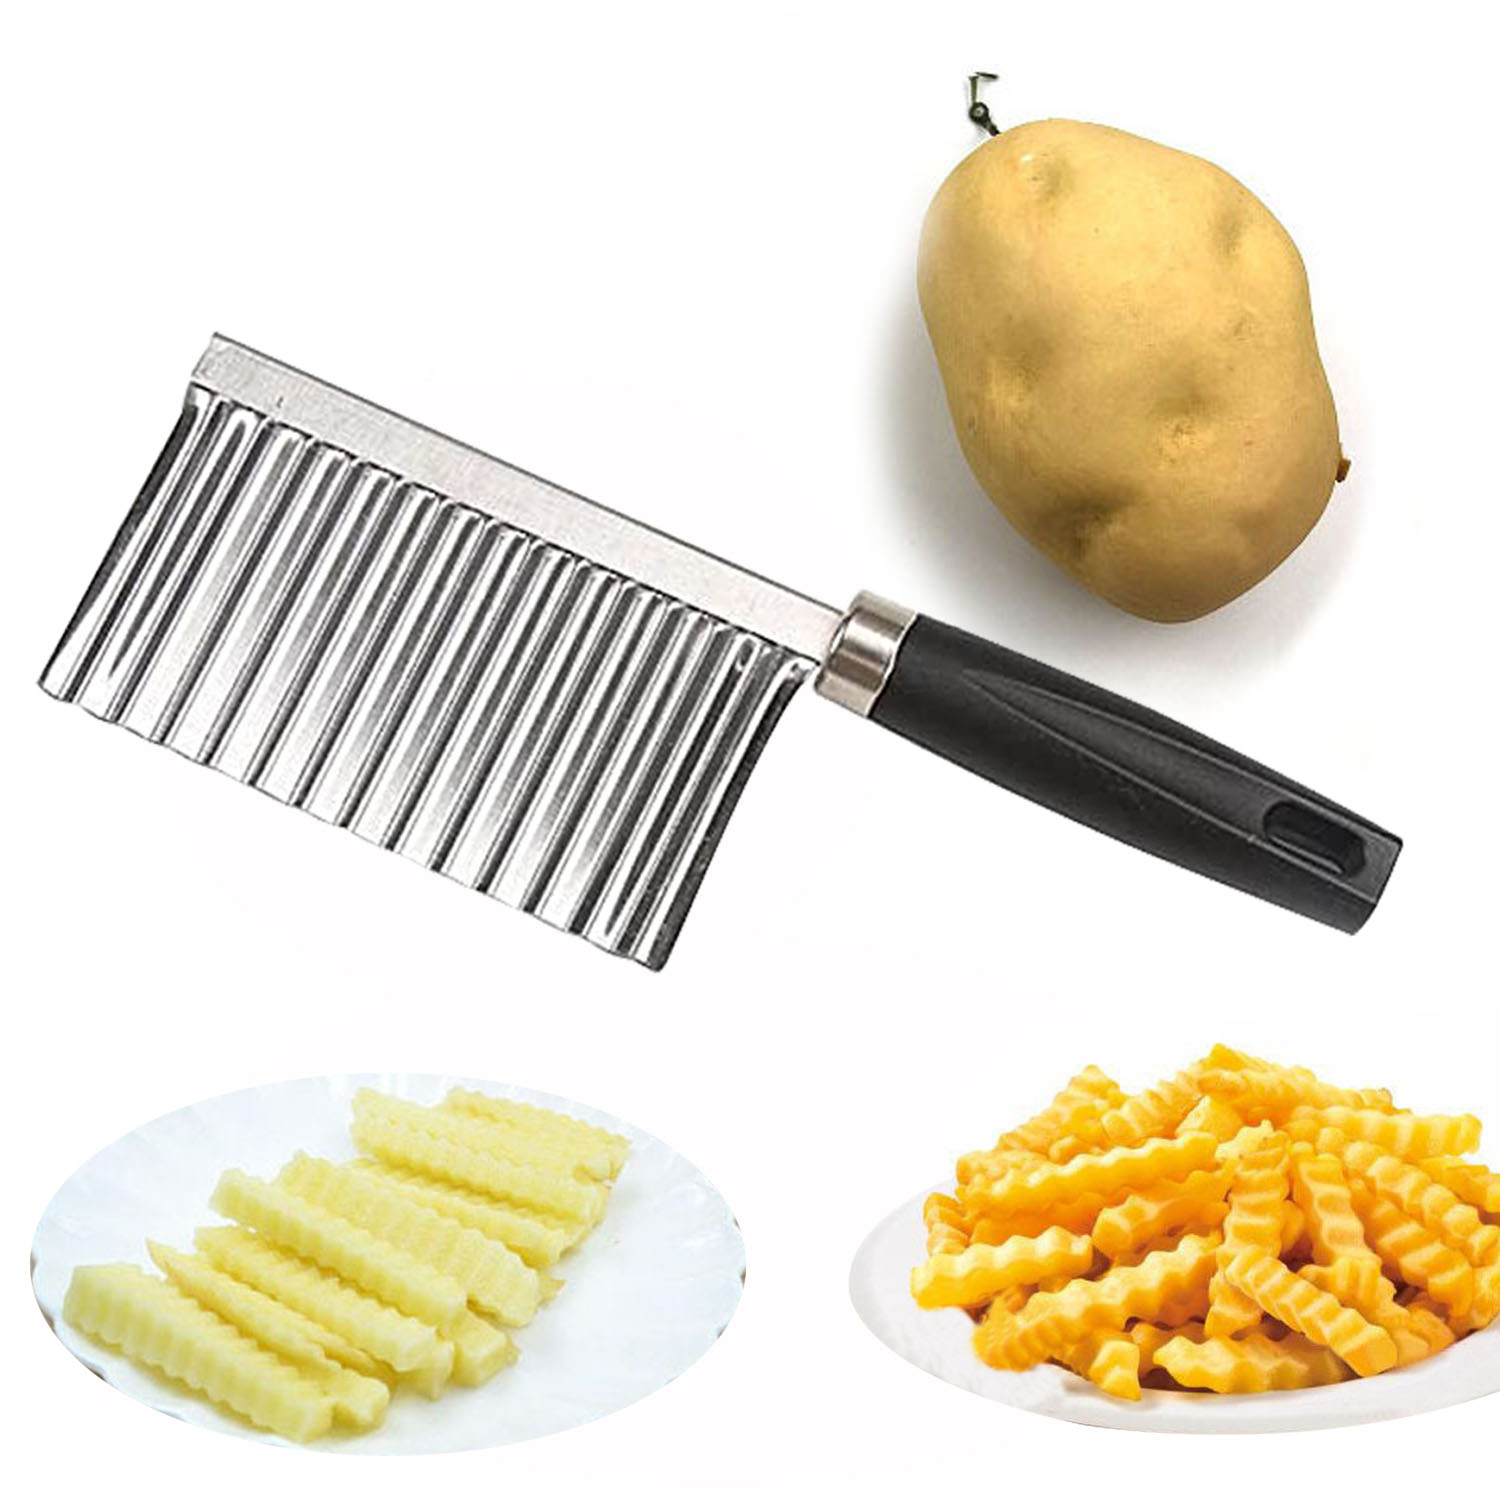 Cuchillo cortador para freír francés arrugado, patatas fritas de zanahoria, verduras, utensilios de cocina para freír francés, cuchillo ondulado multifuncional de acero inoxidable